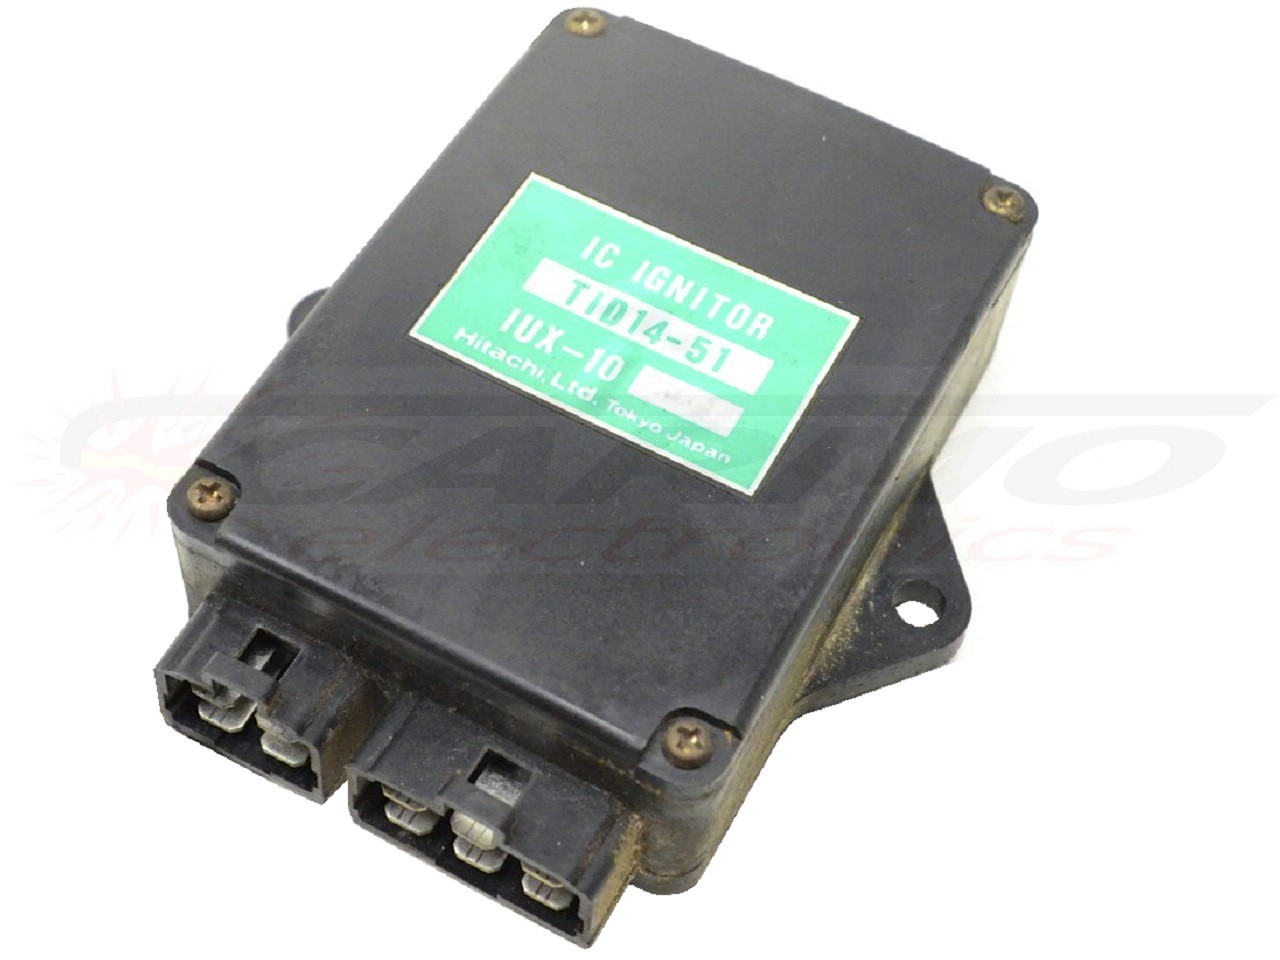 FJ1100 TCI CDI dispositif de commande boîte noire Hitachi TID14-51 1UX